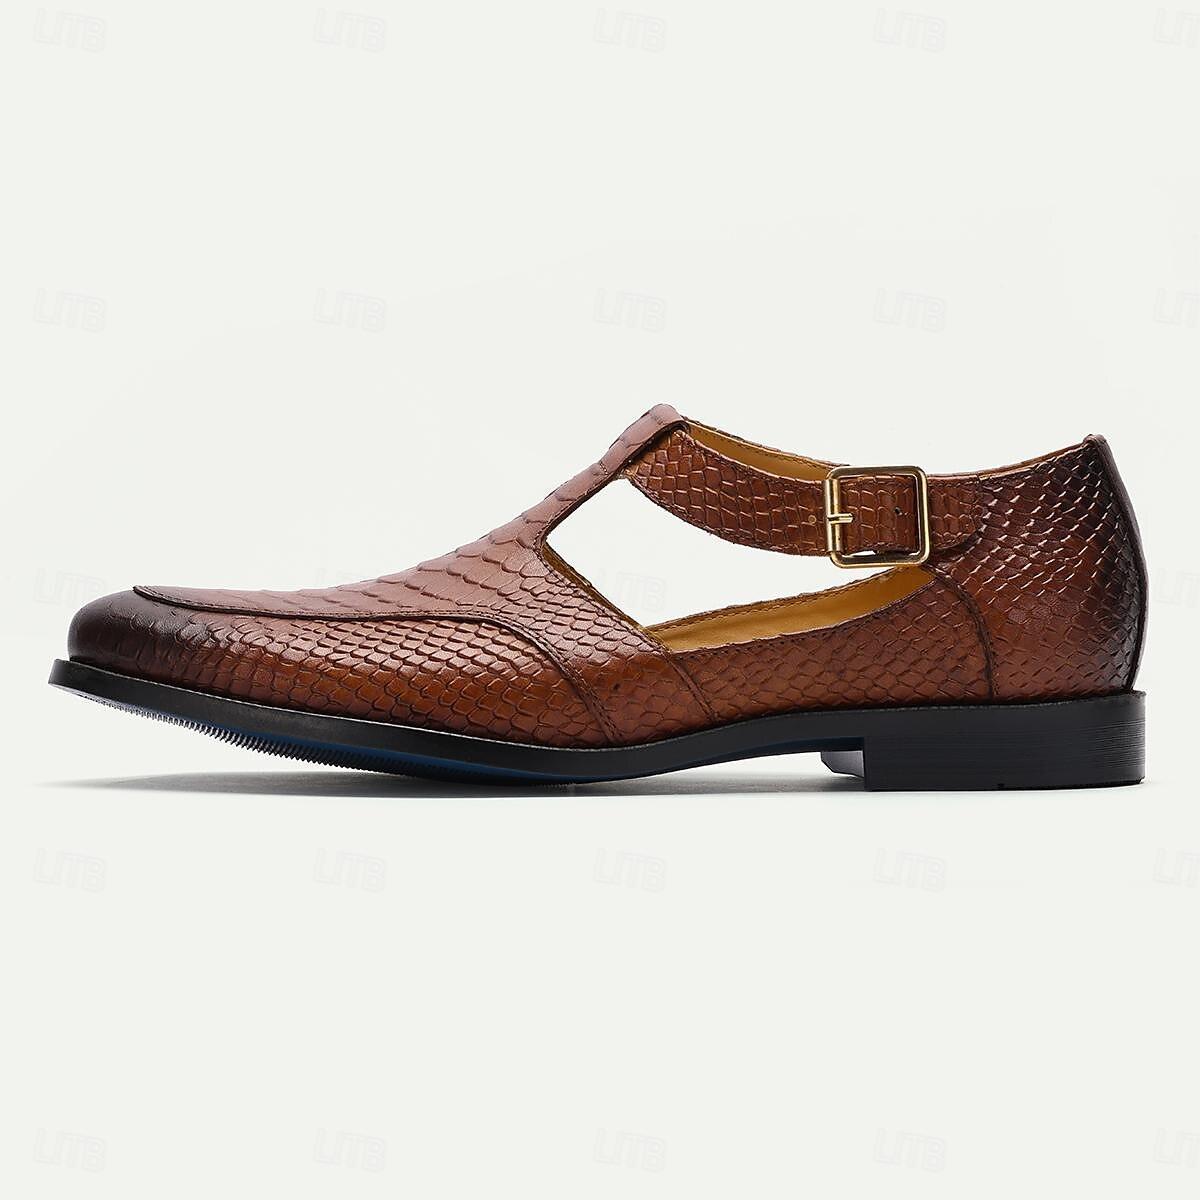 Men's genuine leather sandals